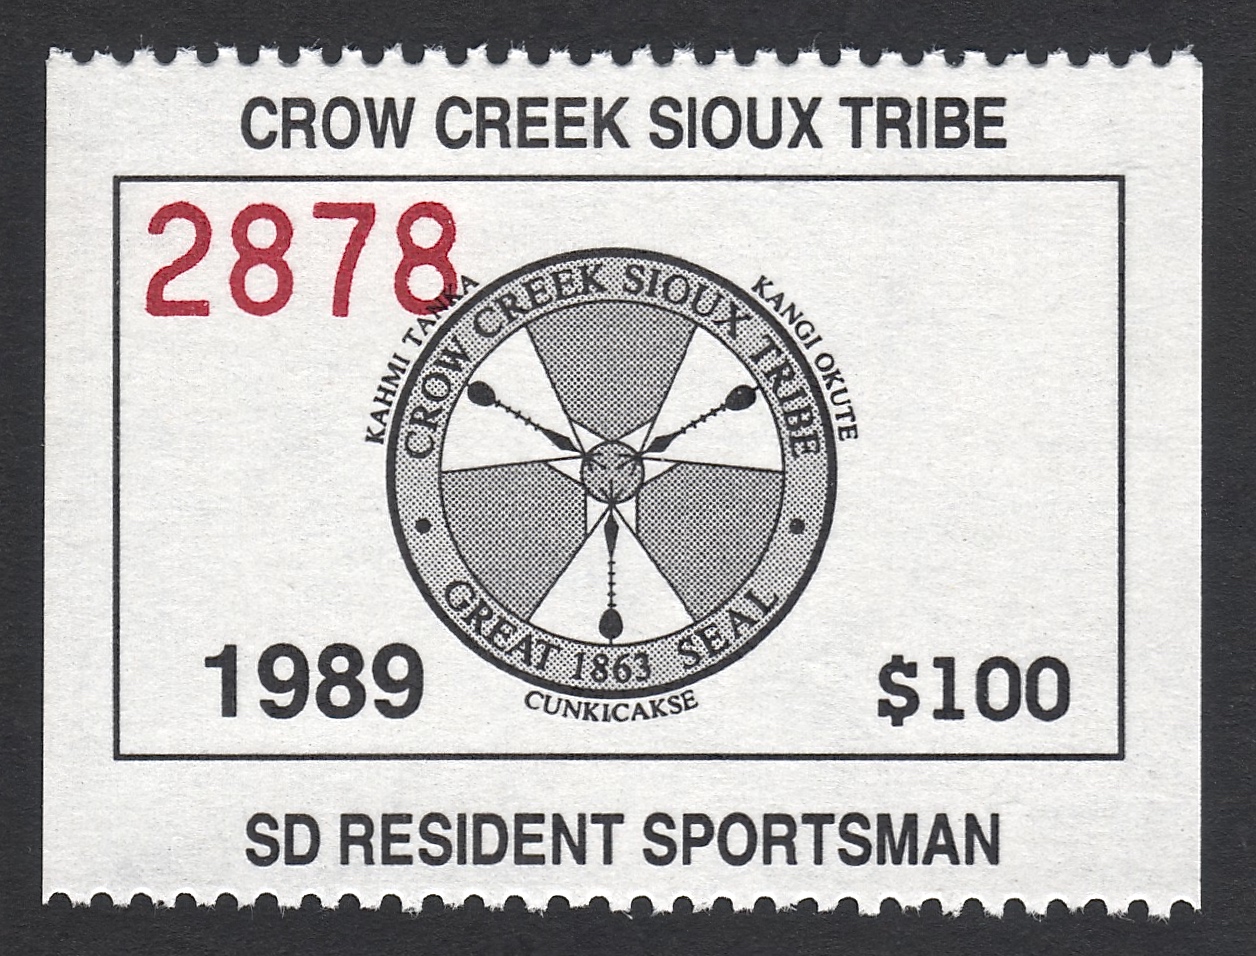 1989 Crow Creek SD Resident Sportsman